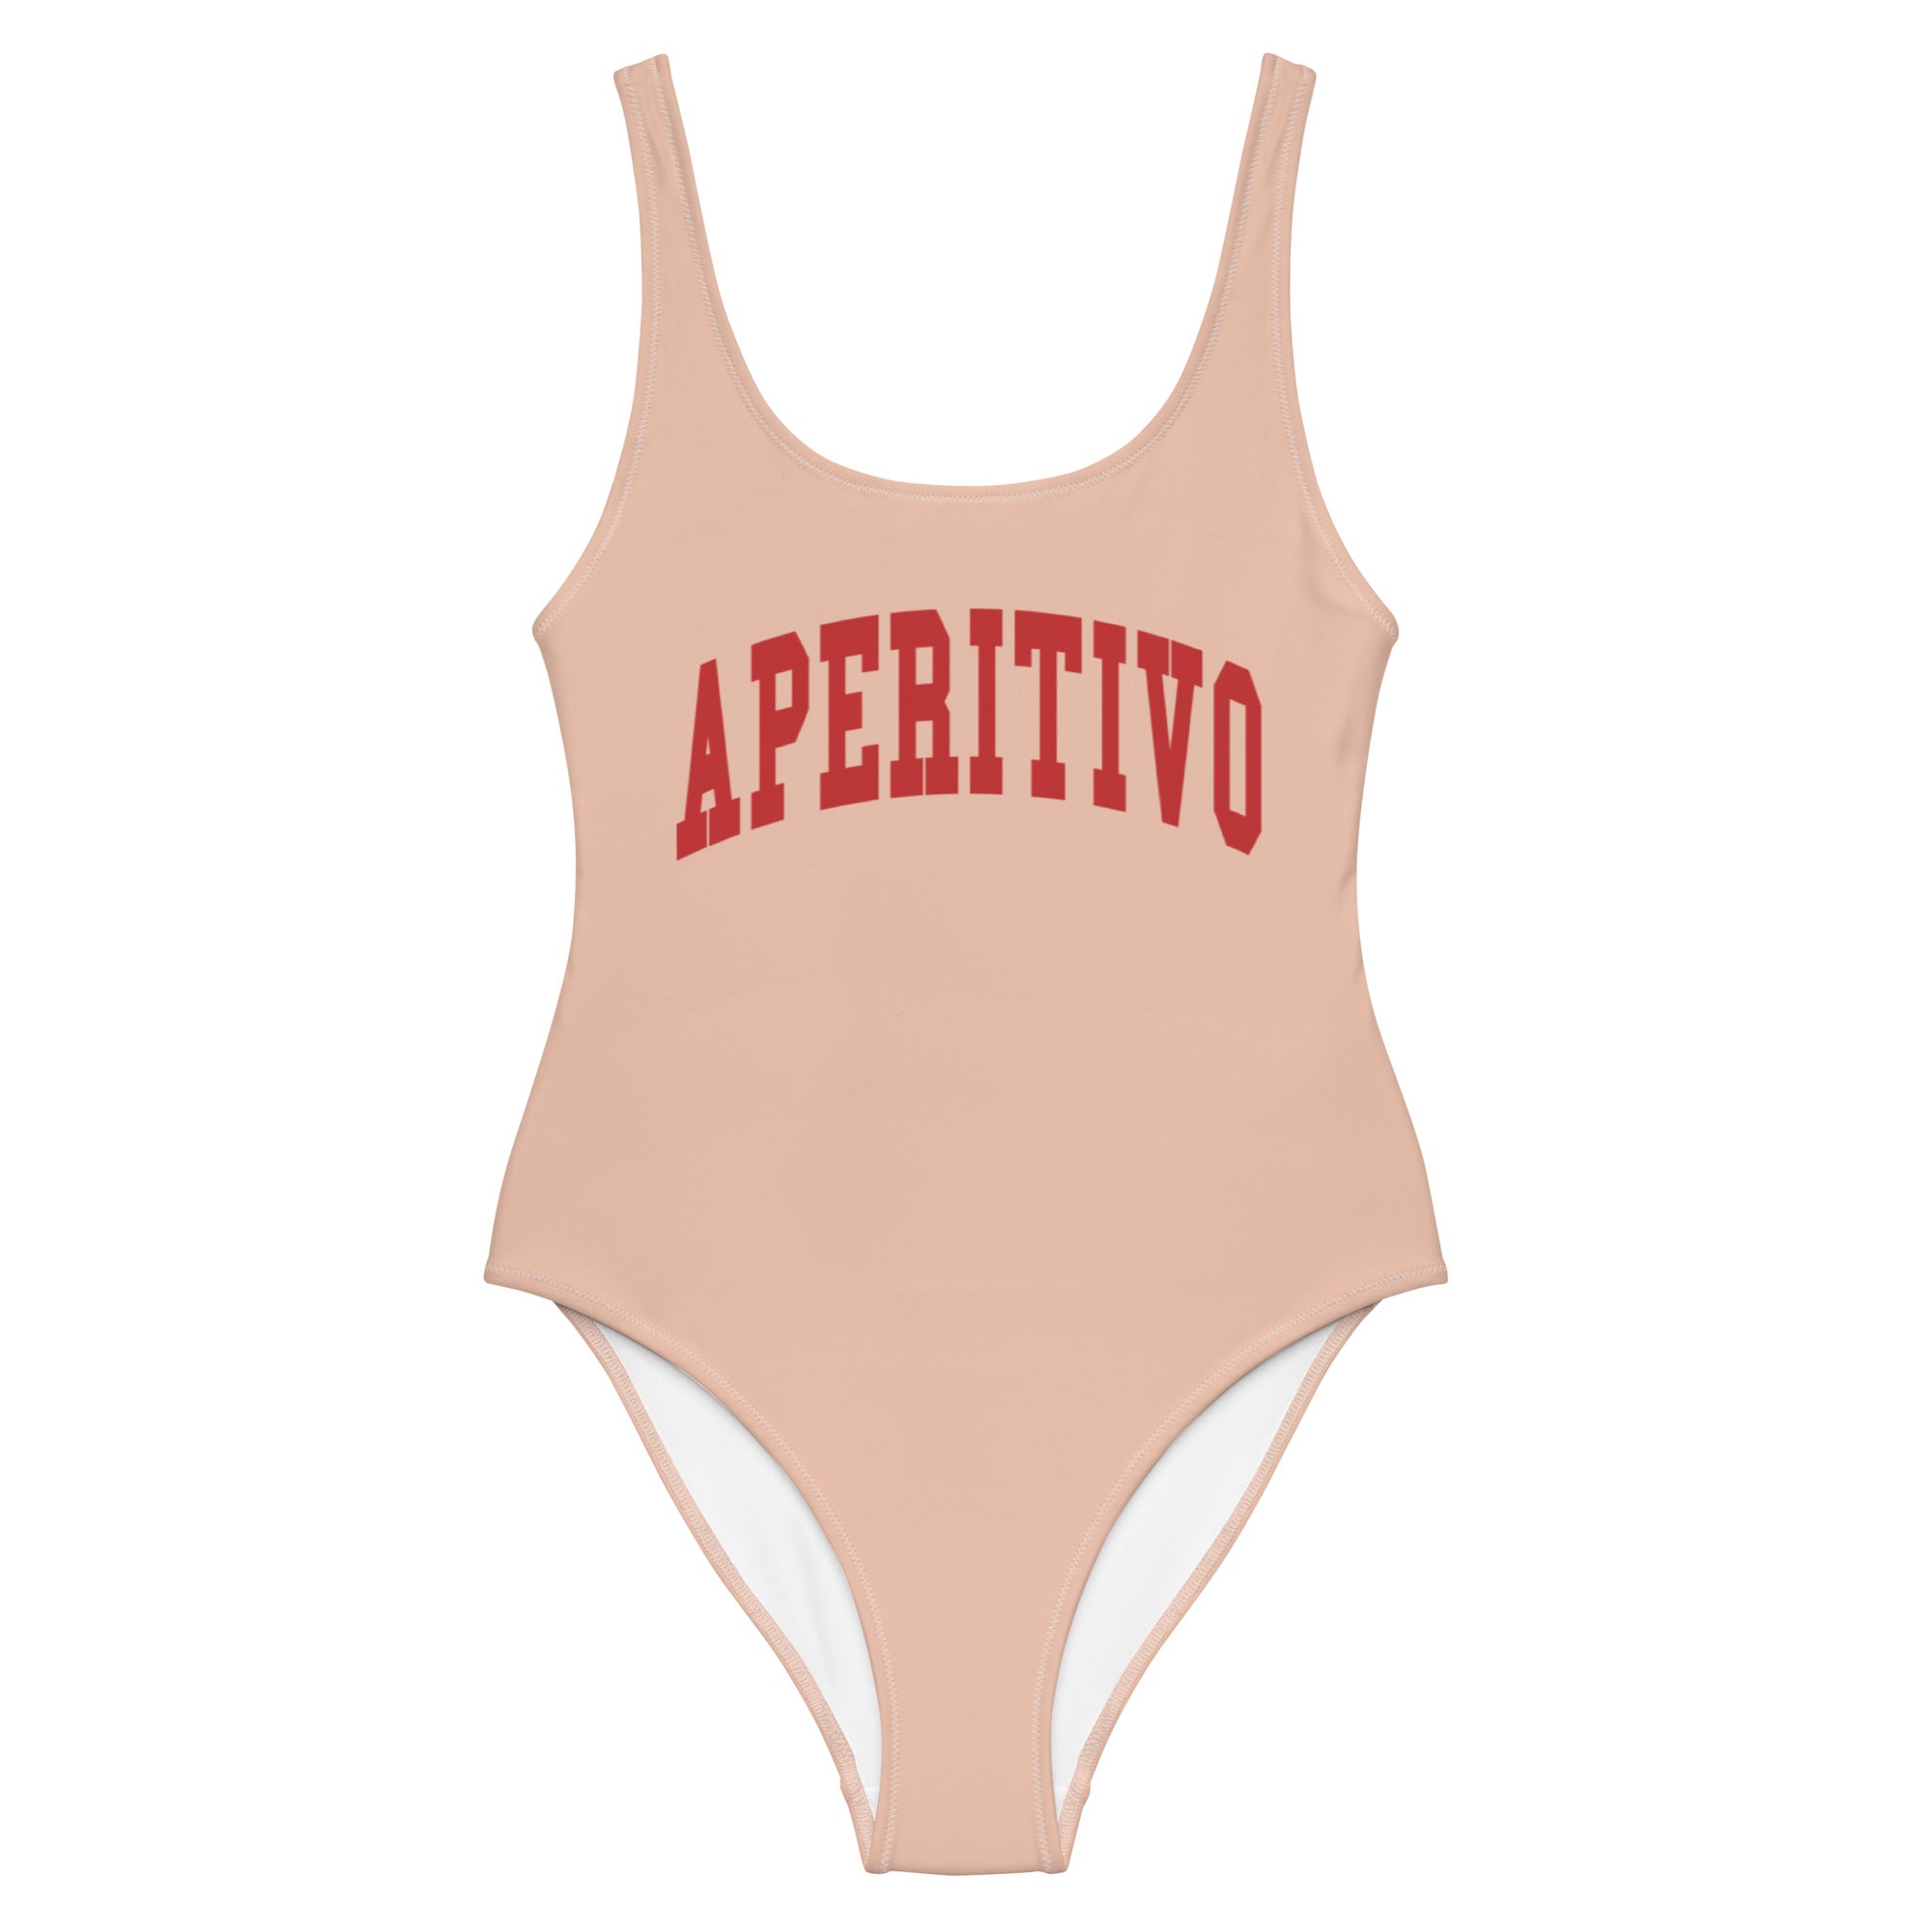 Aperitivo - Swimsuit - The Refined Spirit